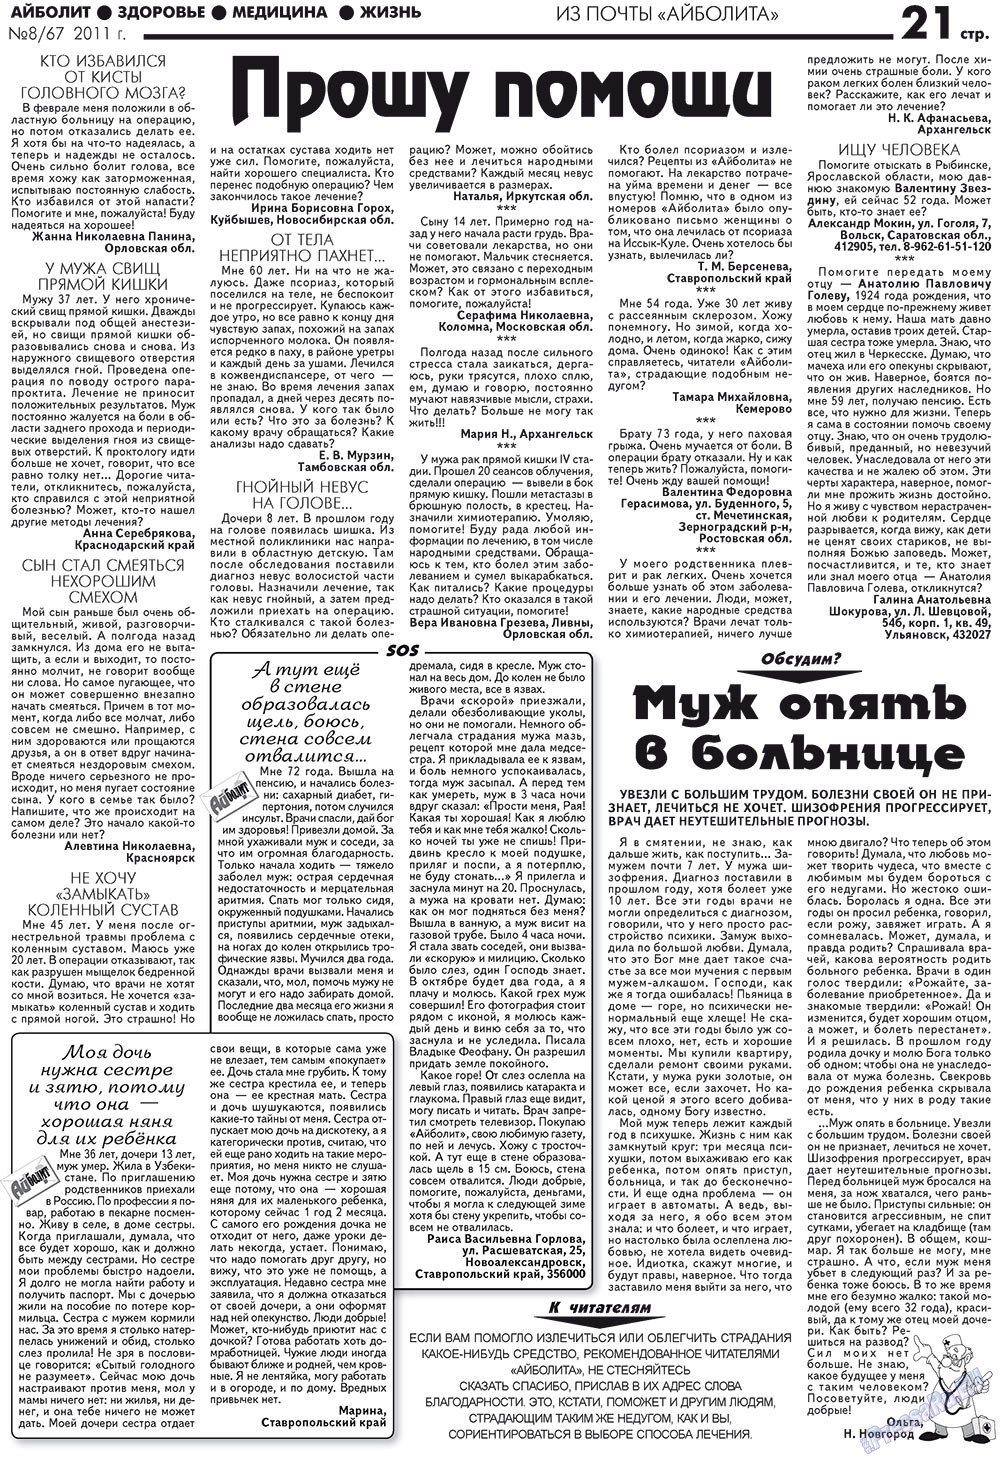 АйБолит (газета). 2011 год, номер 8, стр. 21